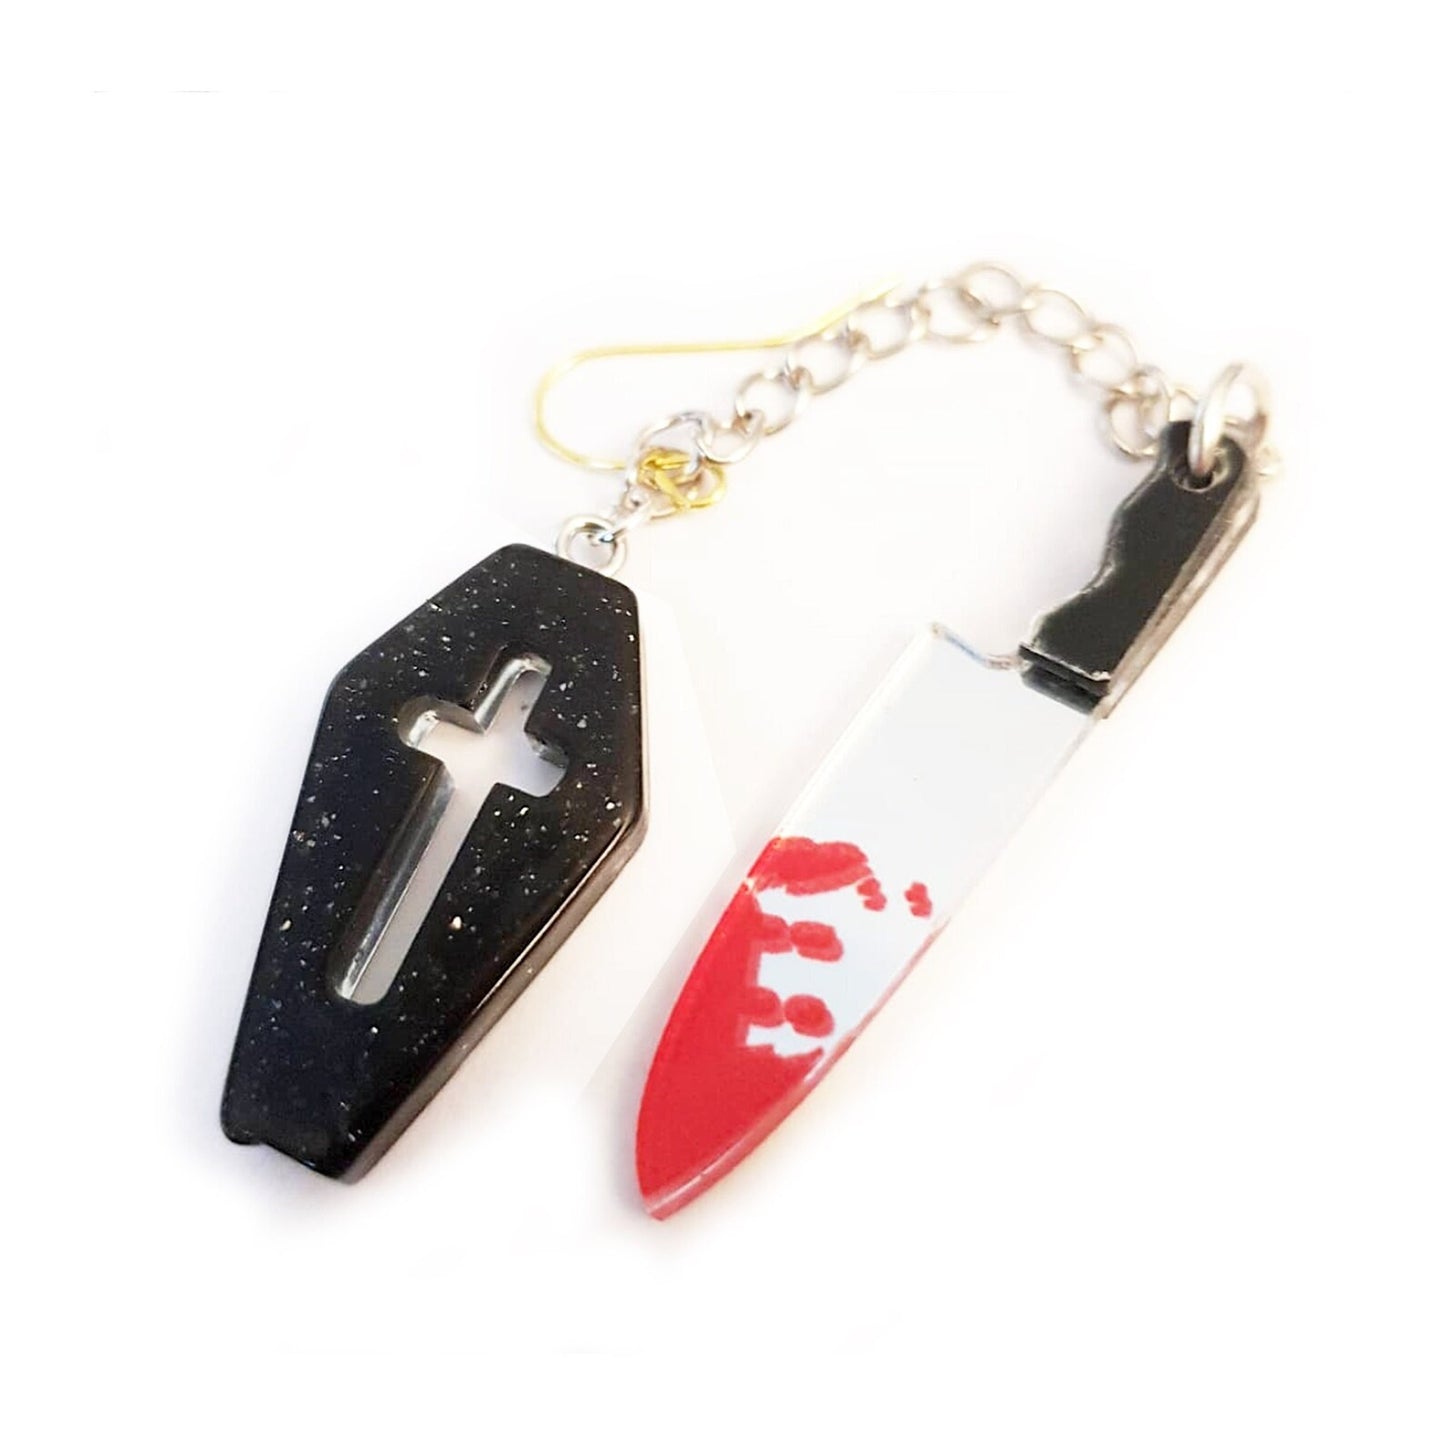 HALLOWEEN - Bloody knife and coffin earrings, Creepy Jewelry - C o c o F l o w e r